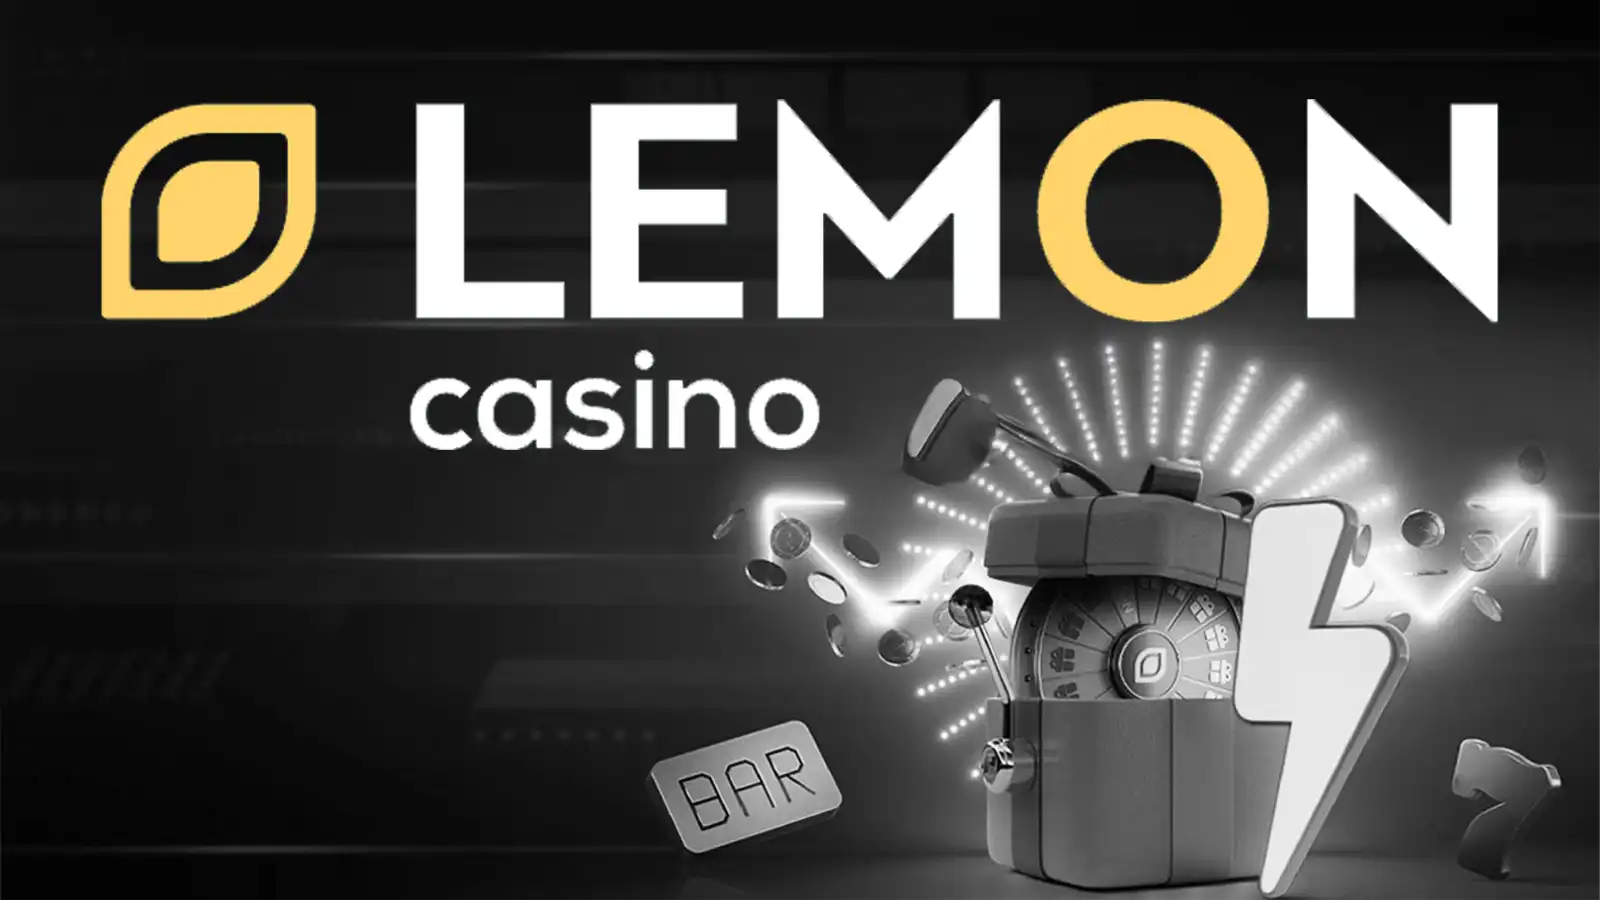 Lemon Casino poster, promoting the company's logo and branding.